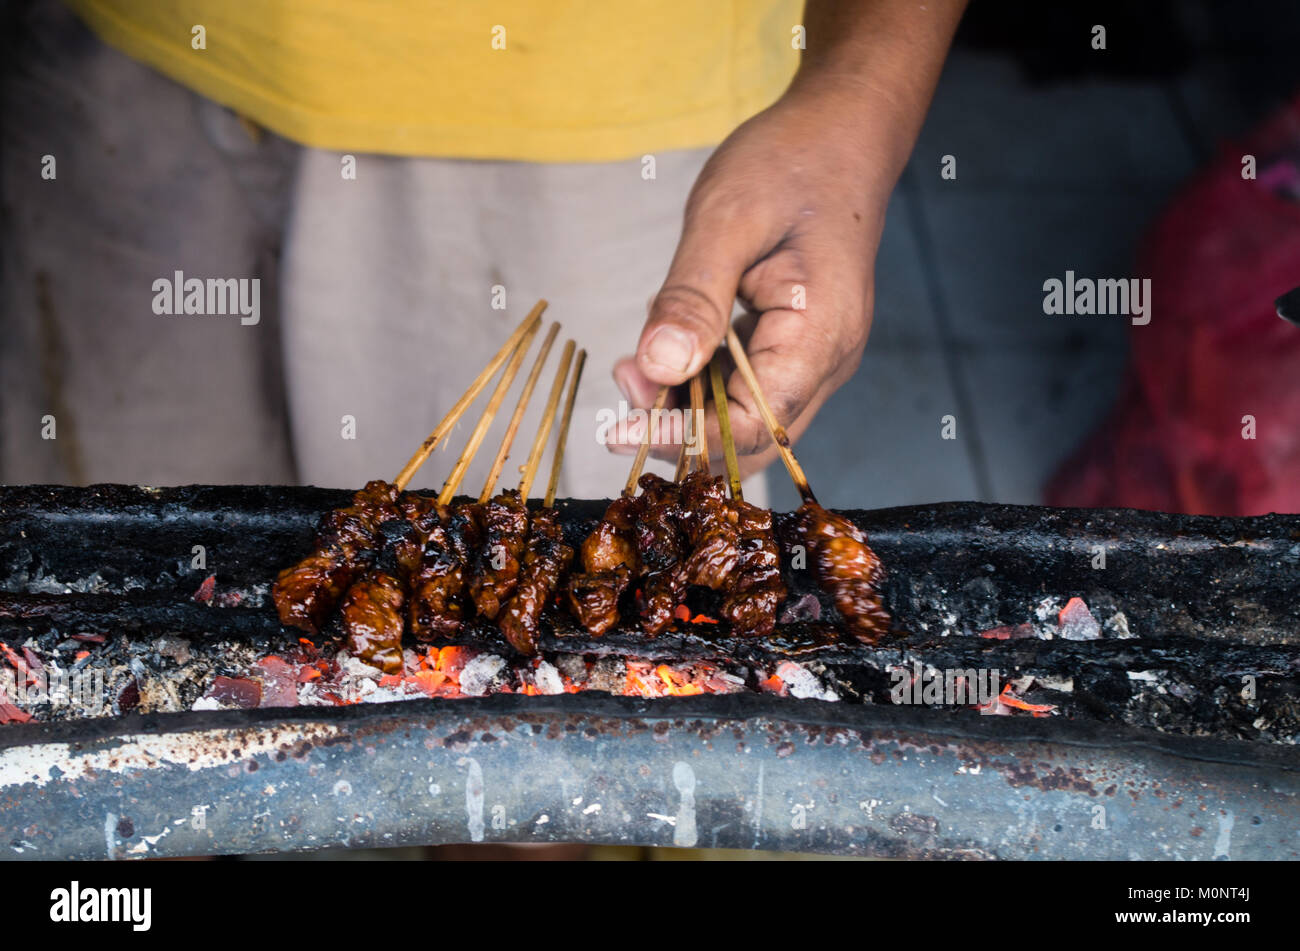 Man preparing sate ayam on local street market in Bali, Indonesia Stock Photo